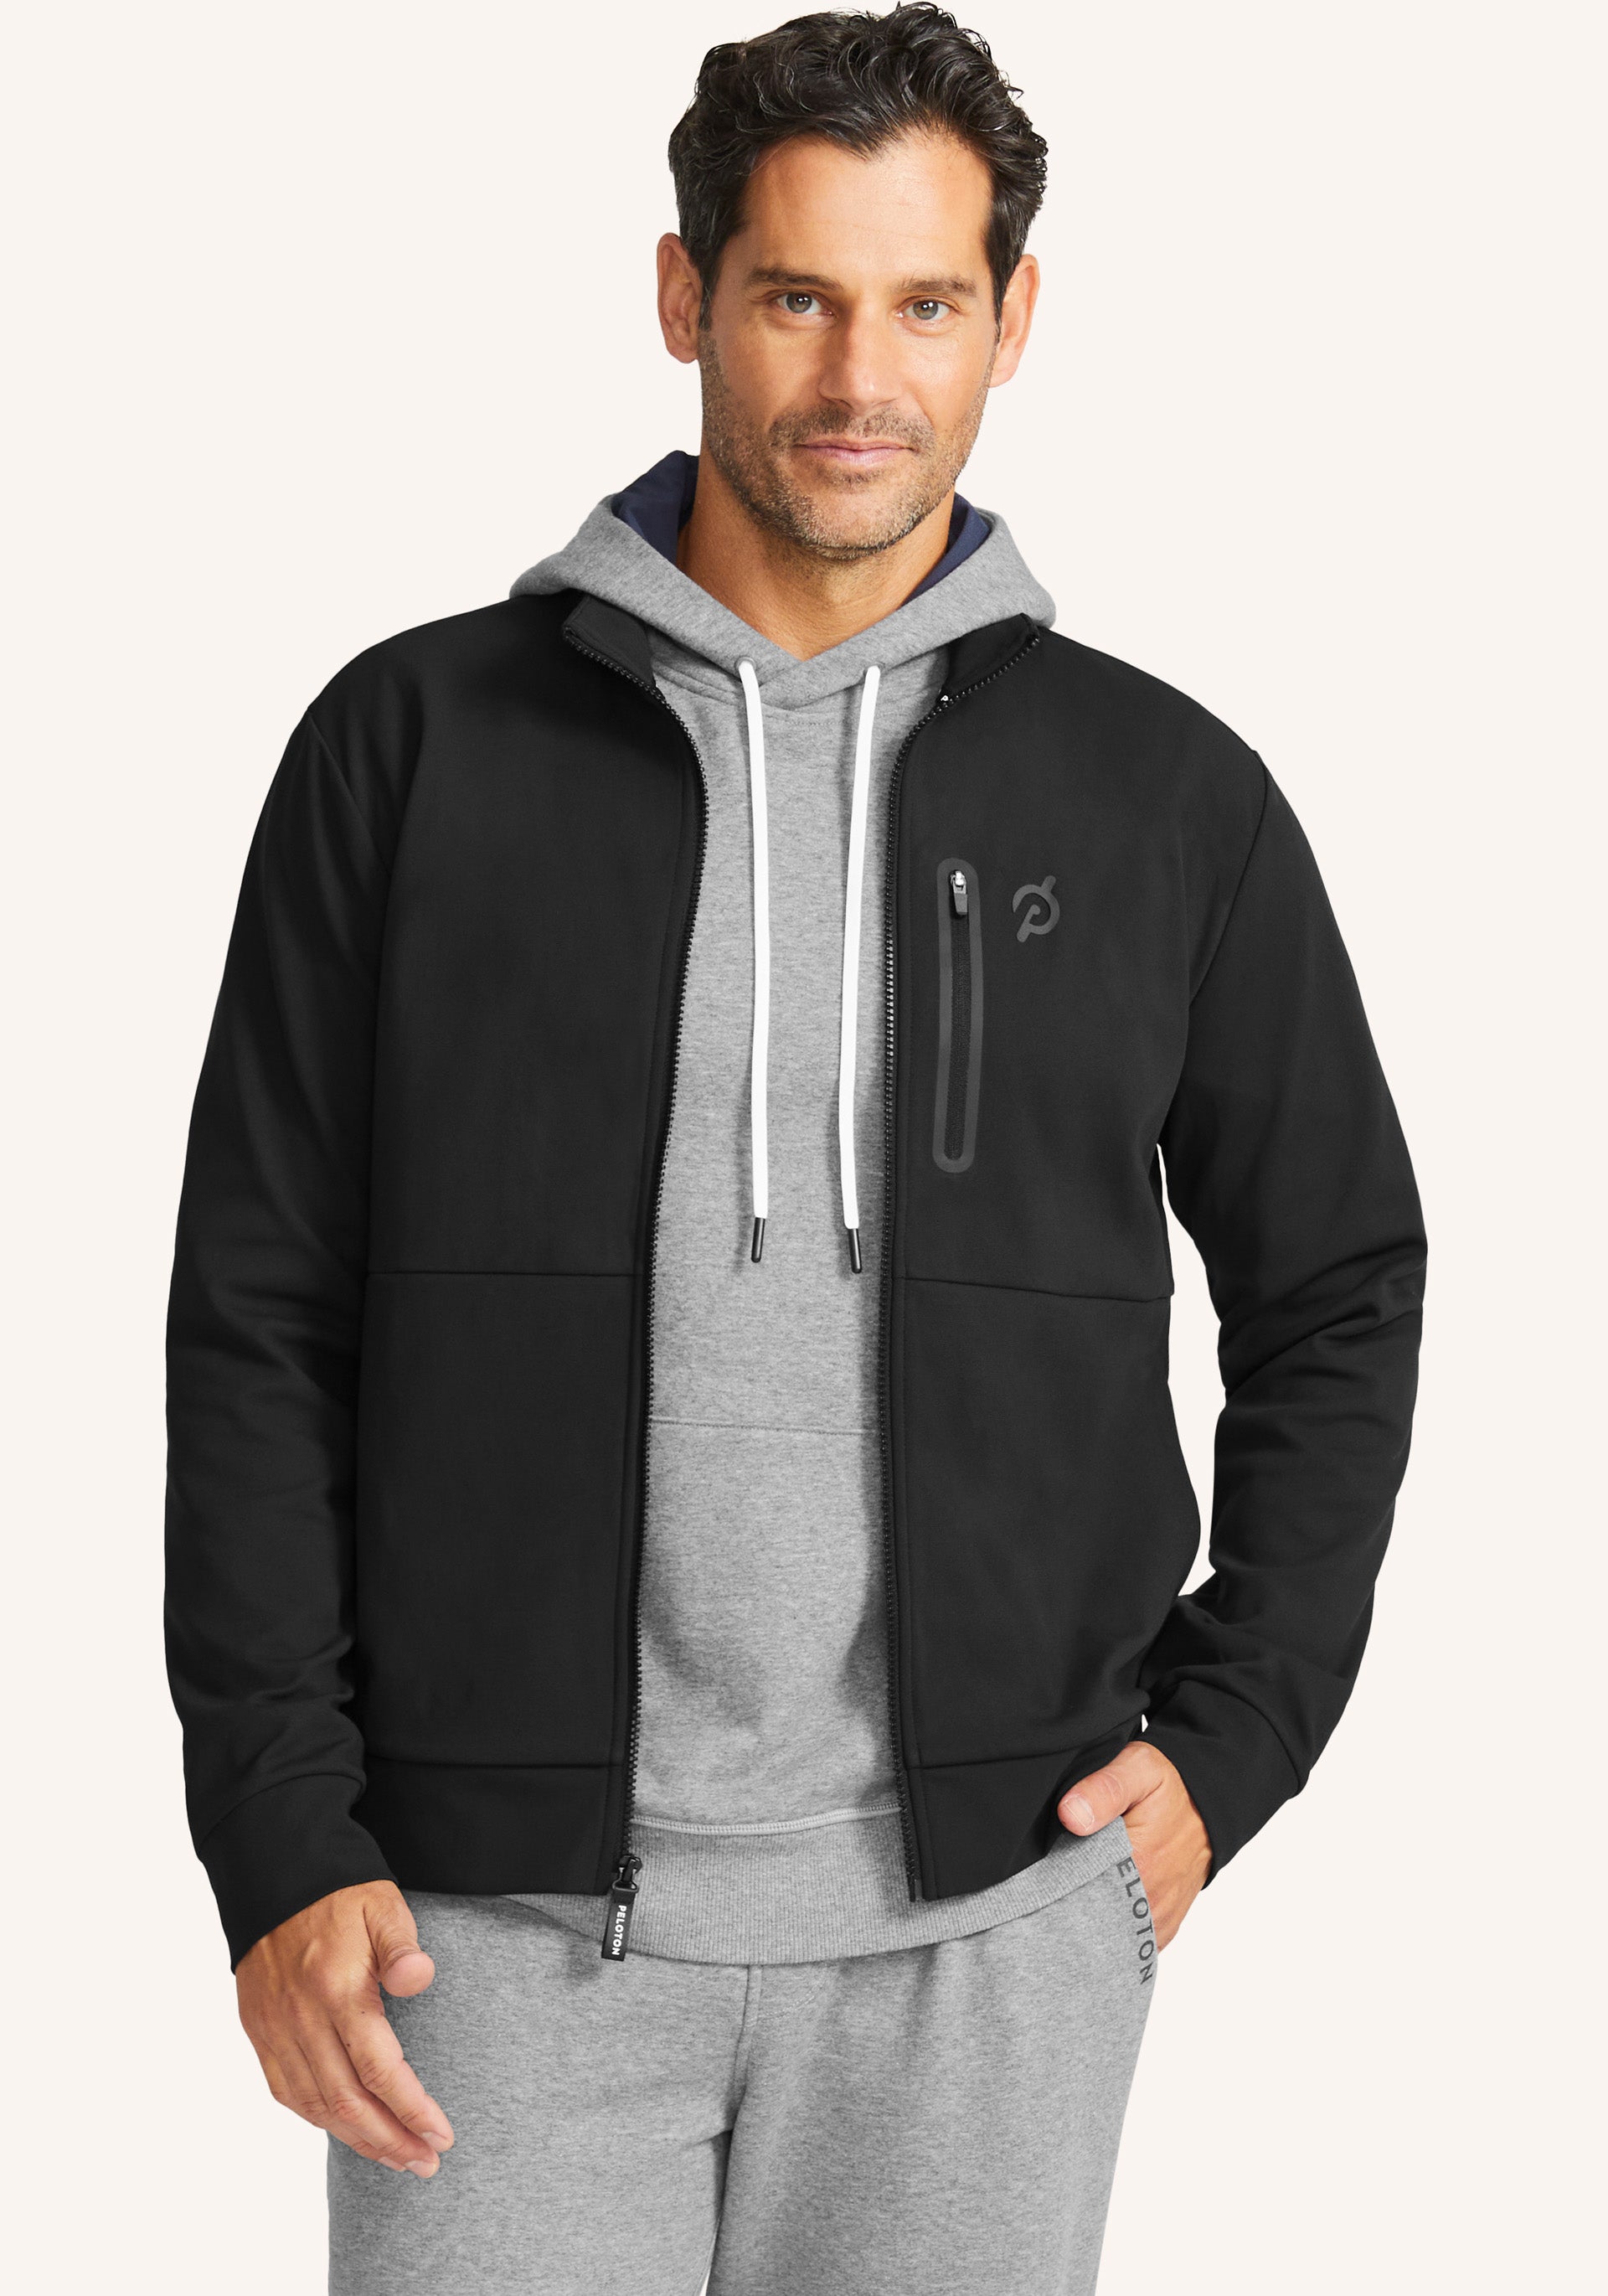 Define Jacket *Luon, Hoodies and Sweatshirts